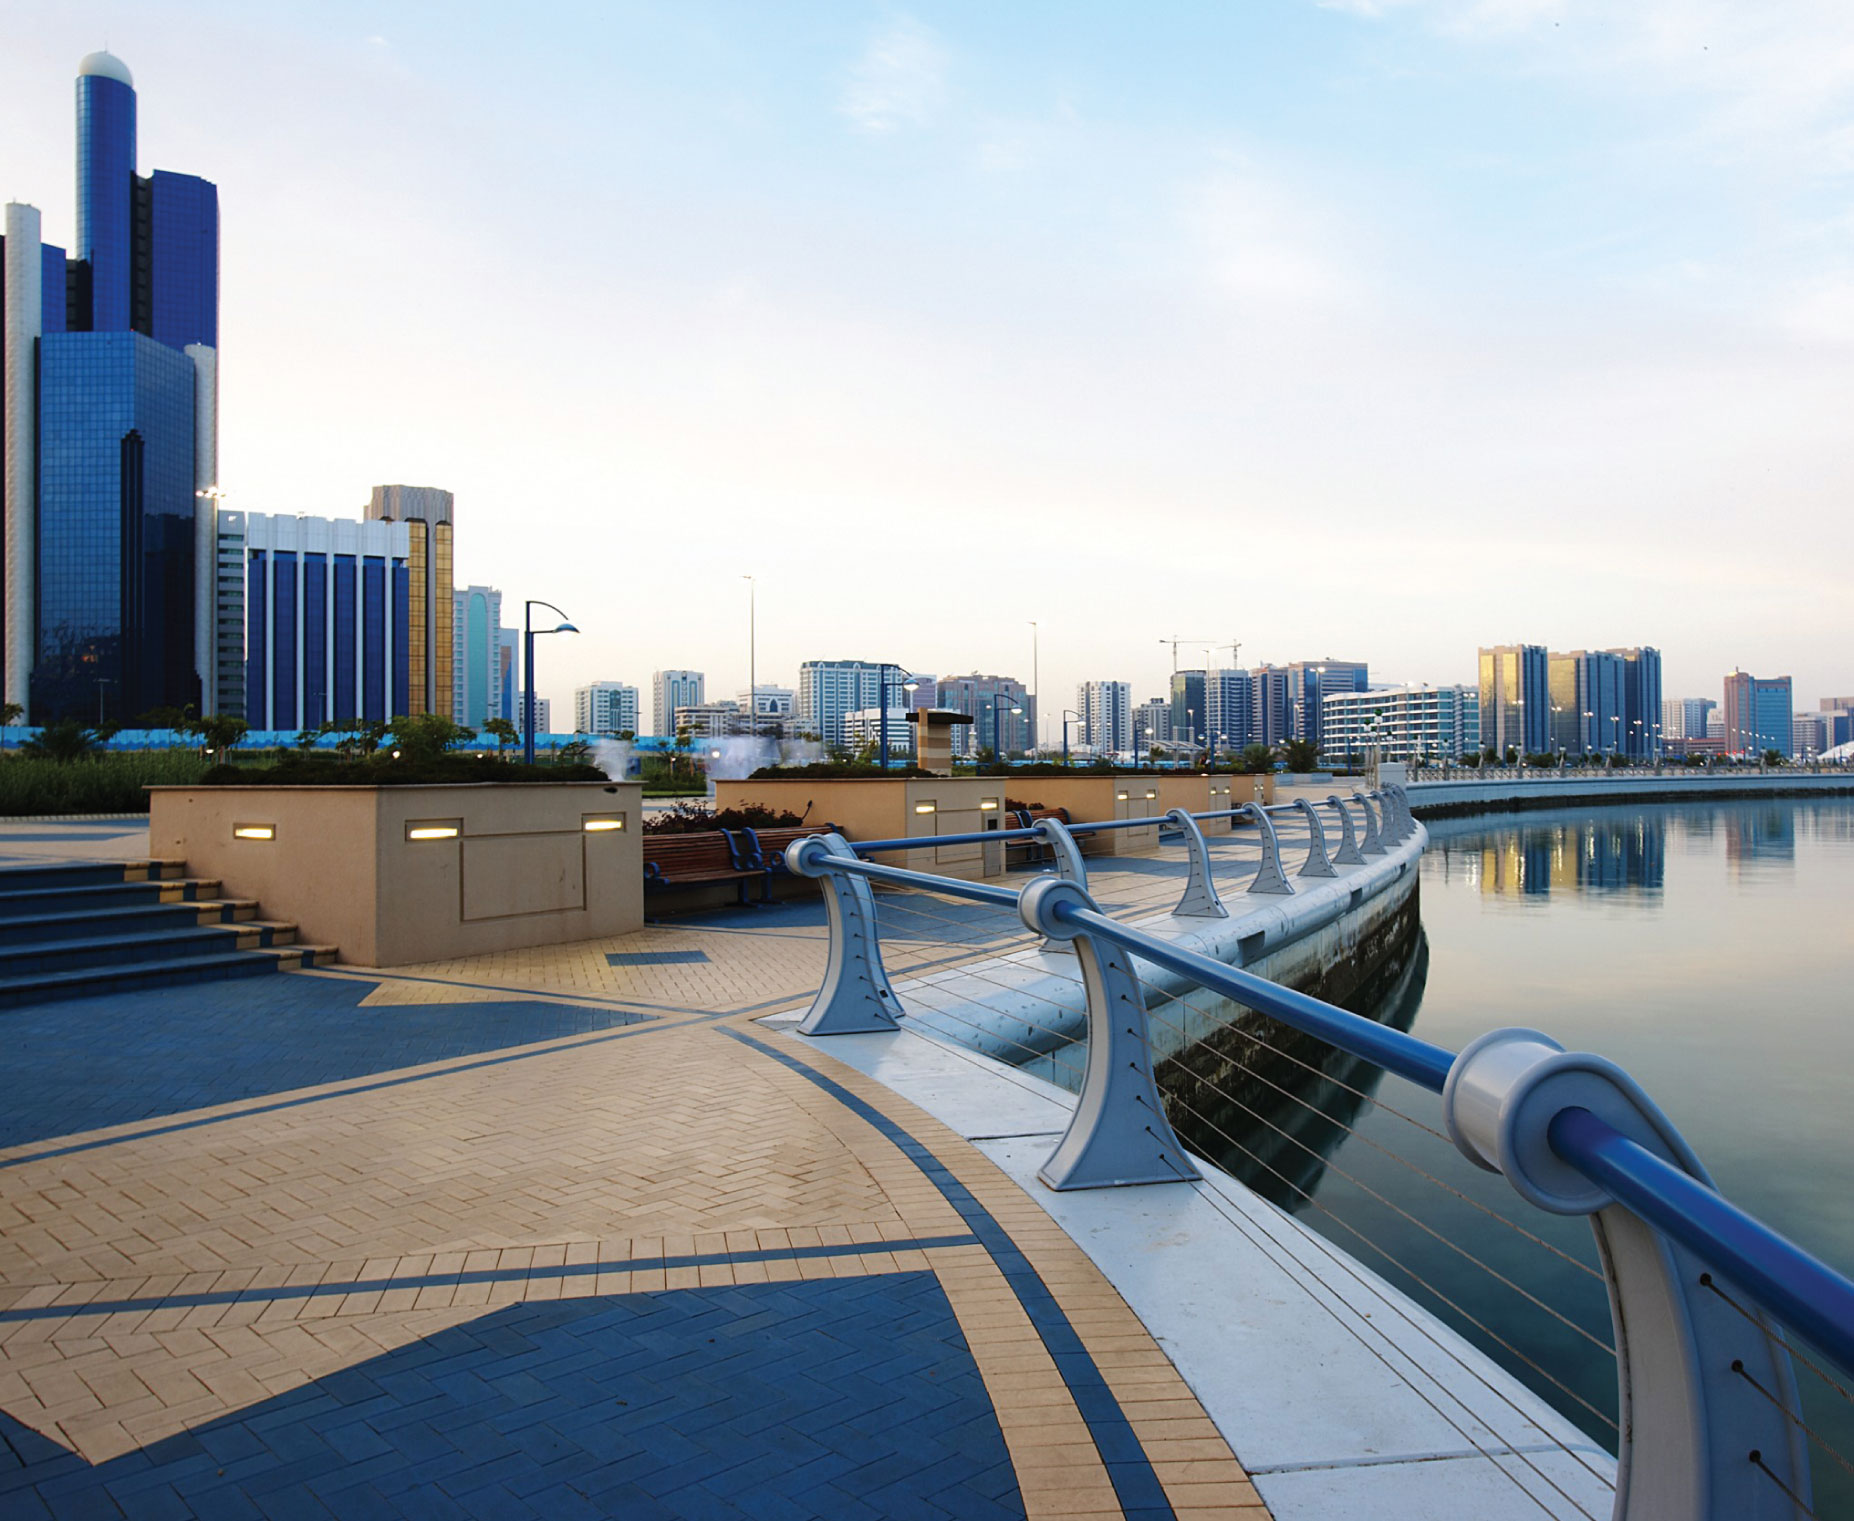 Abu Dhabi Corniche Waterfront View-01.jpg